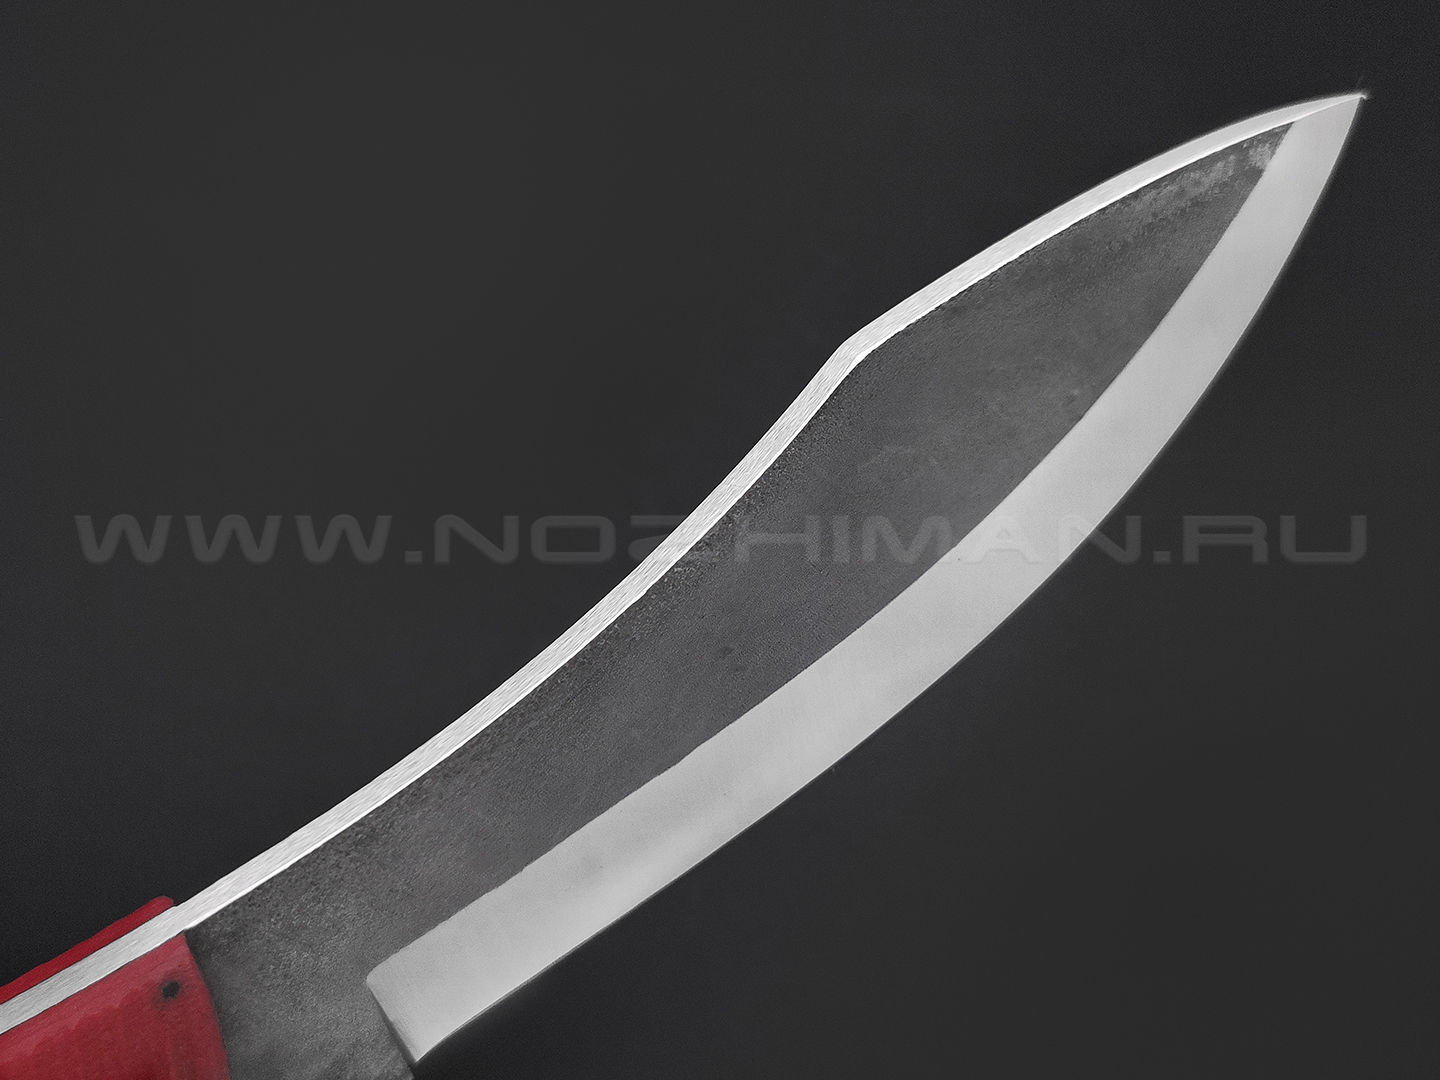 Burlax нож Канадец большой BX0189 сталь D2 satin, рукоять G10 red, ножны Kydex